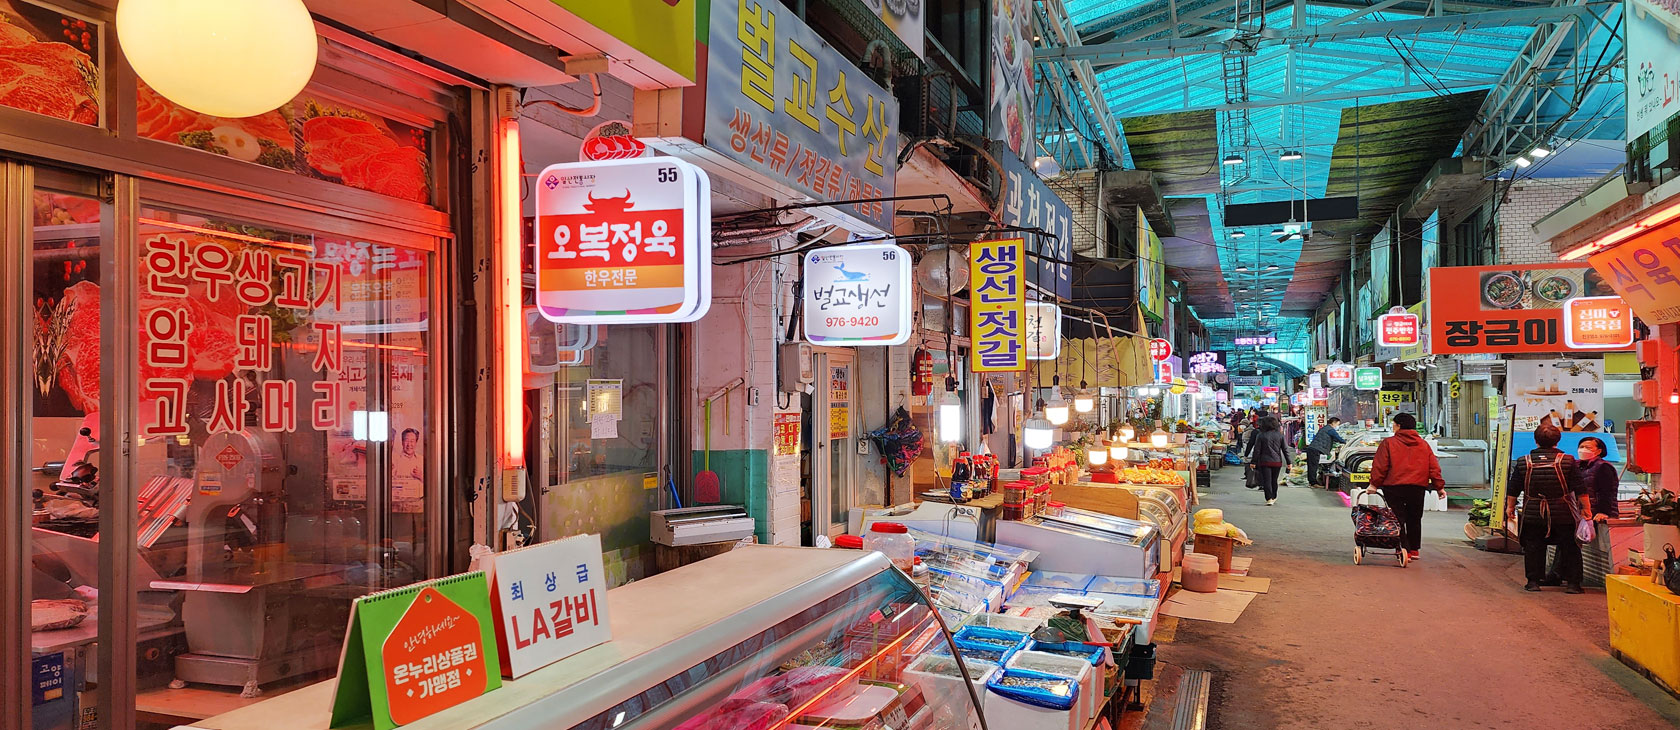 Ilsan Market image2